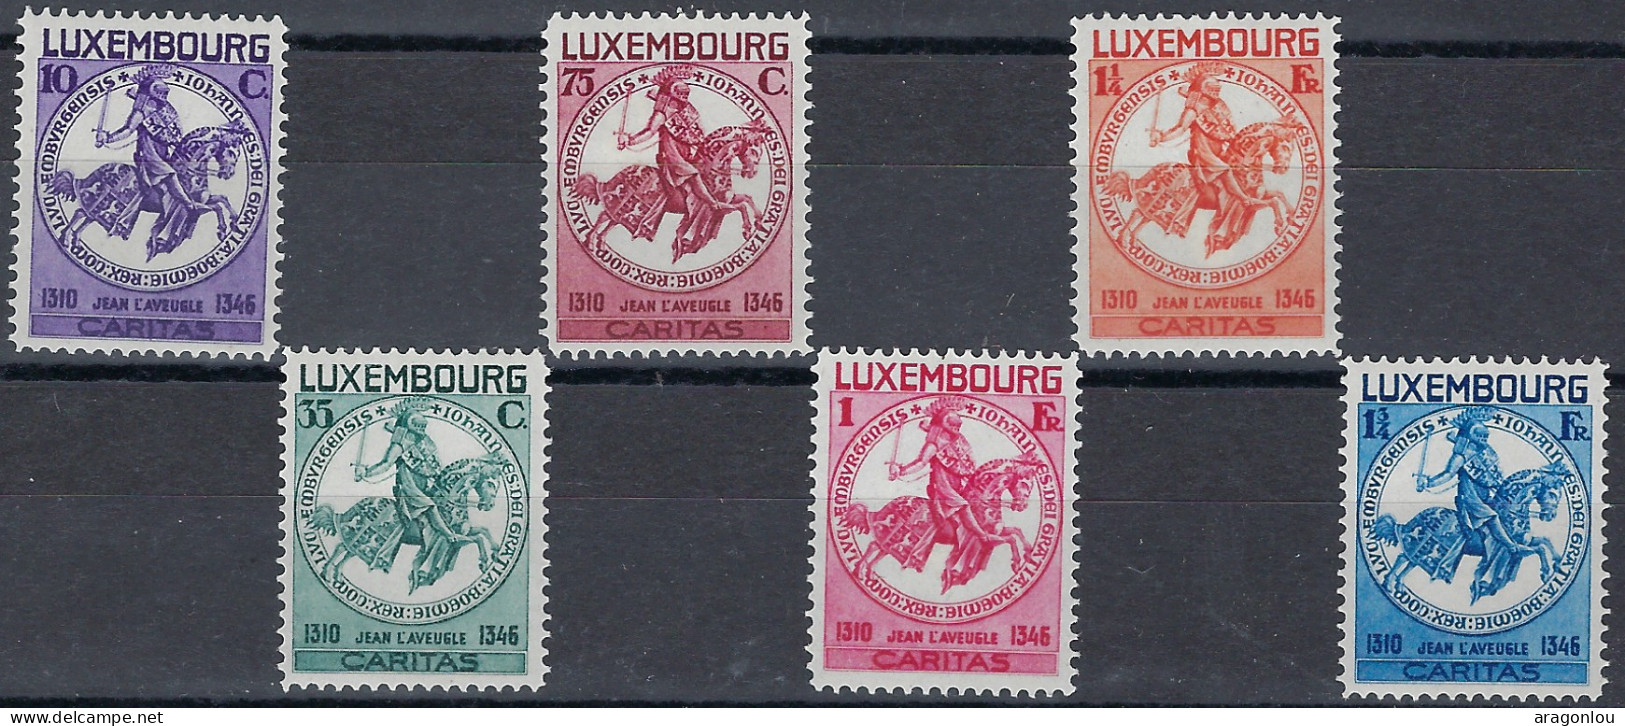 Luxembourg - Luxemburg - Timbres - 1934   Jean L'Aveugle   Série  * - Gebruikt